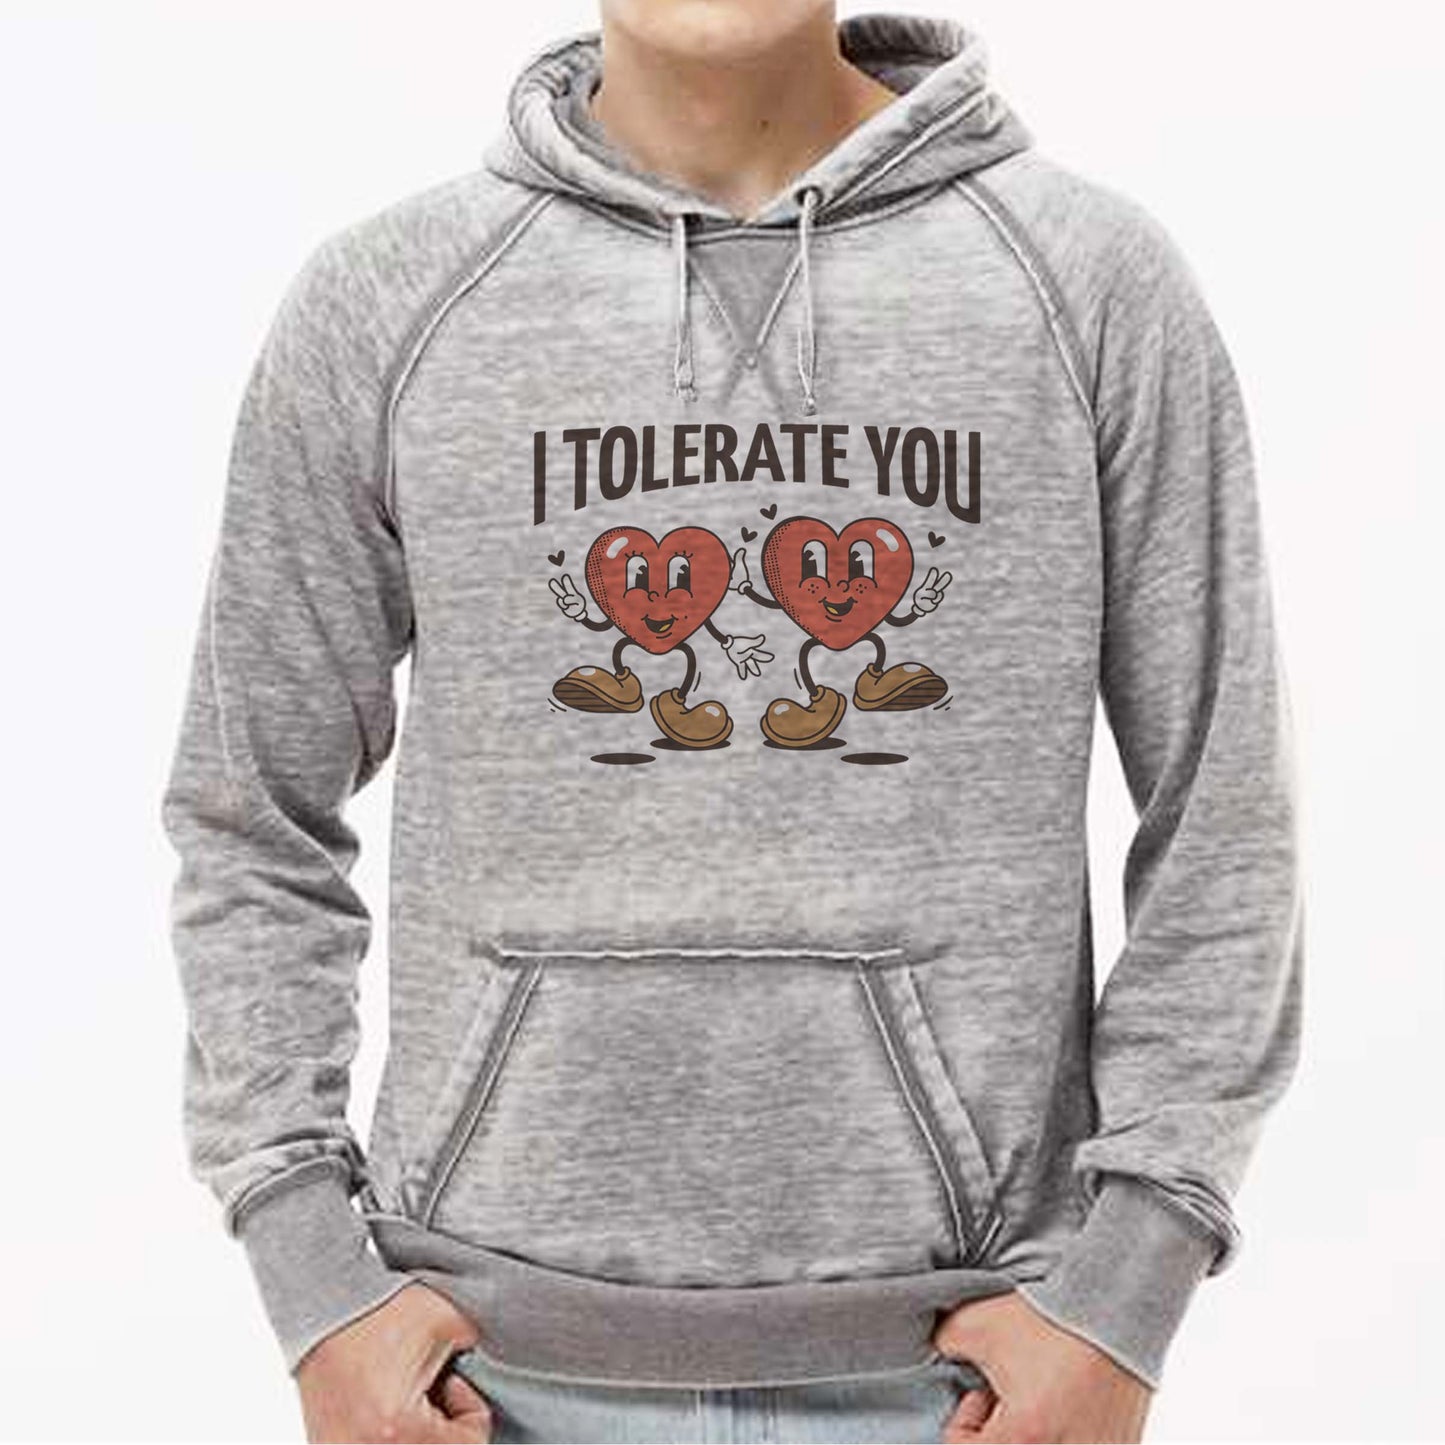 I Tolerate You Sweatshirts